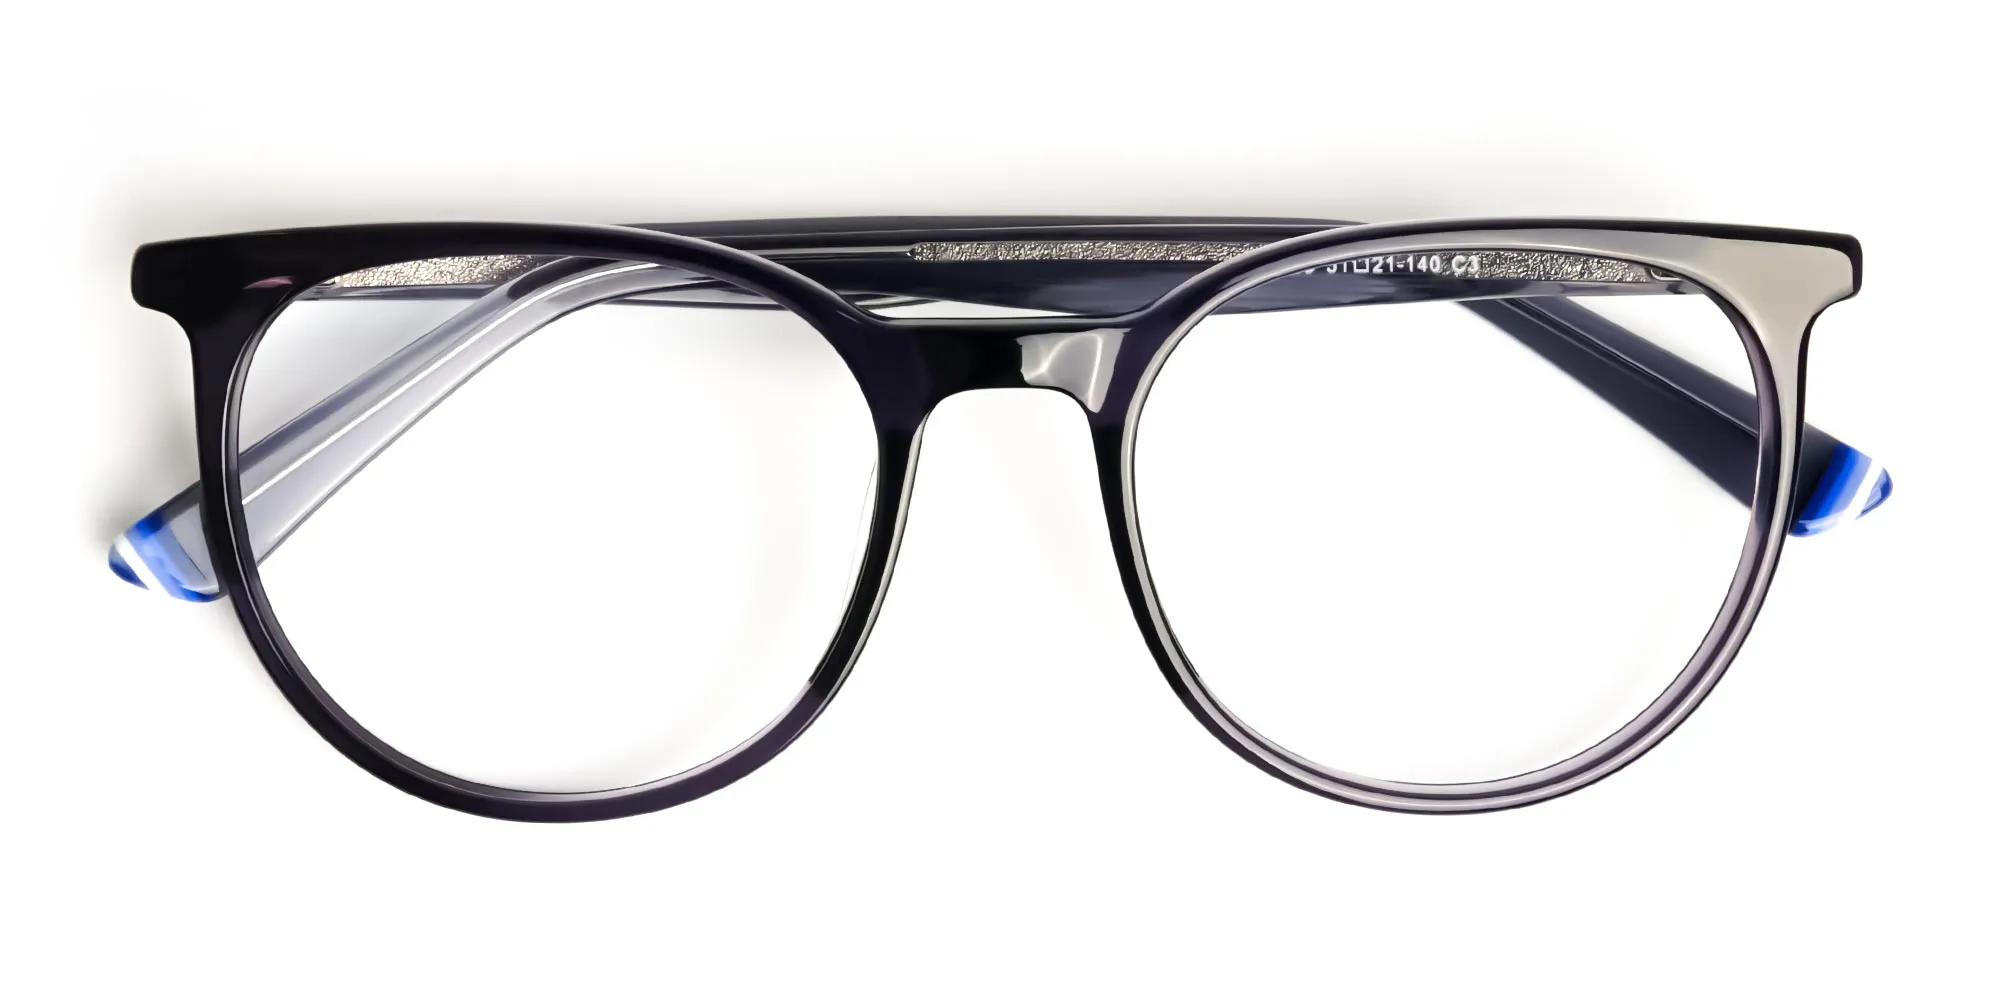 space-grey-designer-round-glasses-frames-2